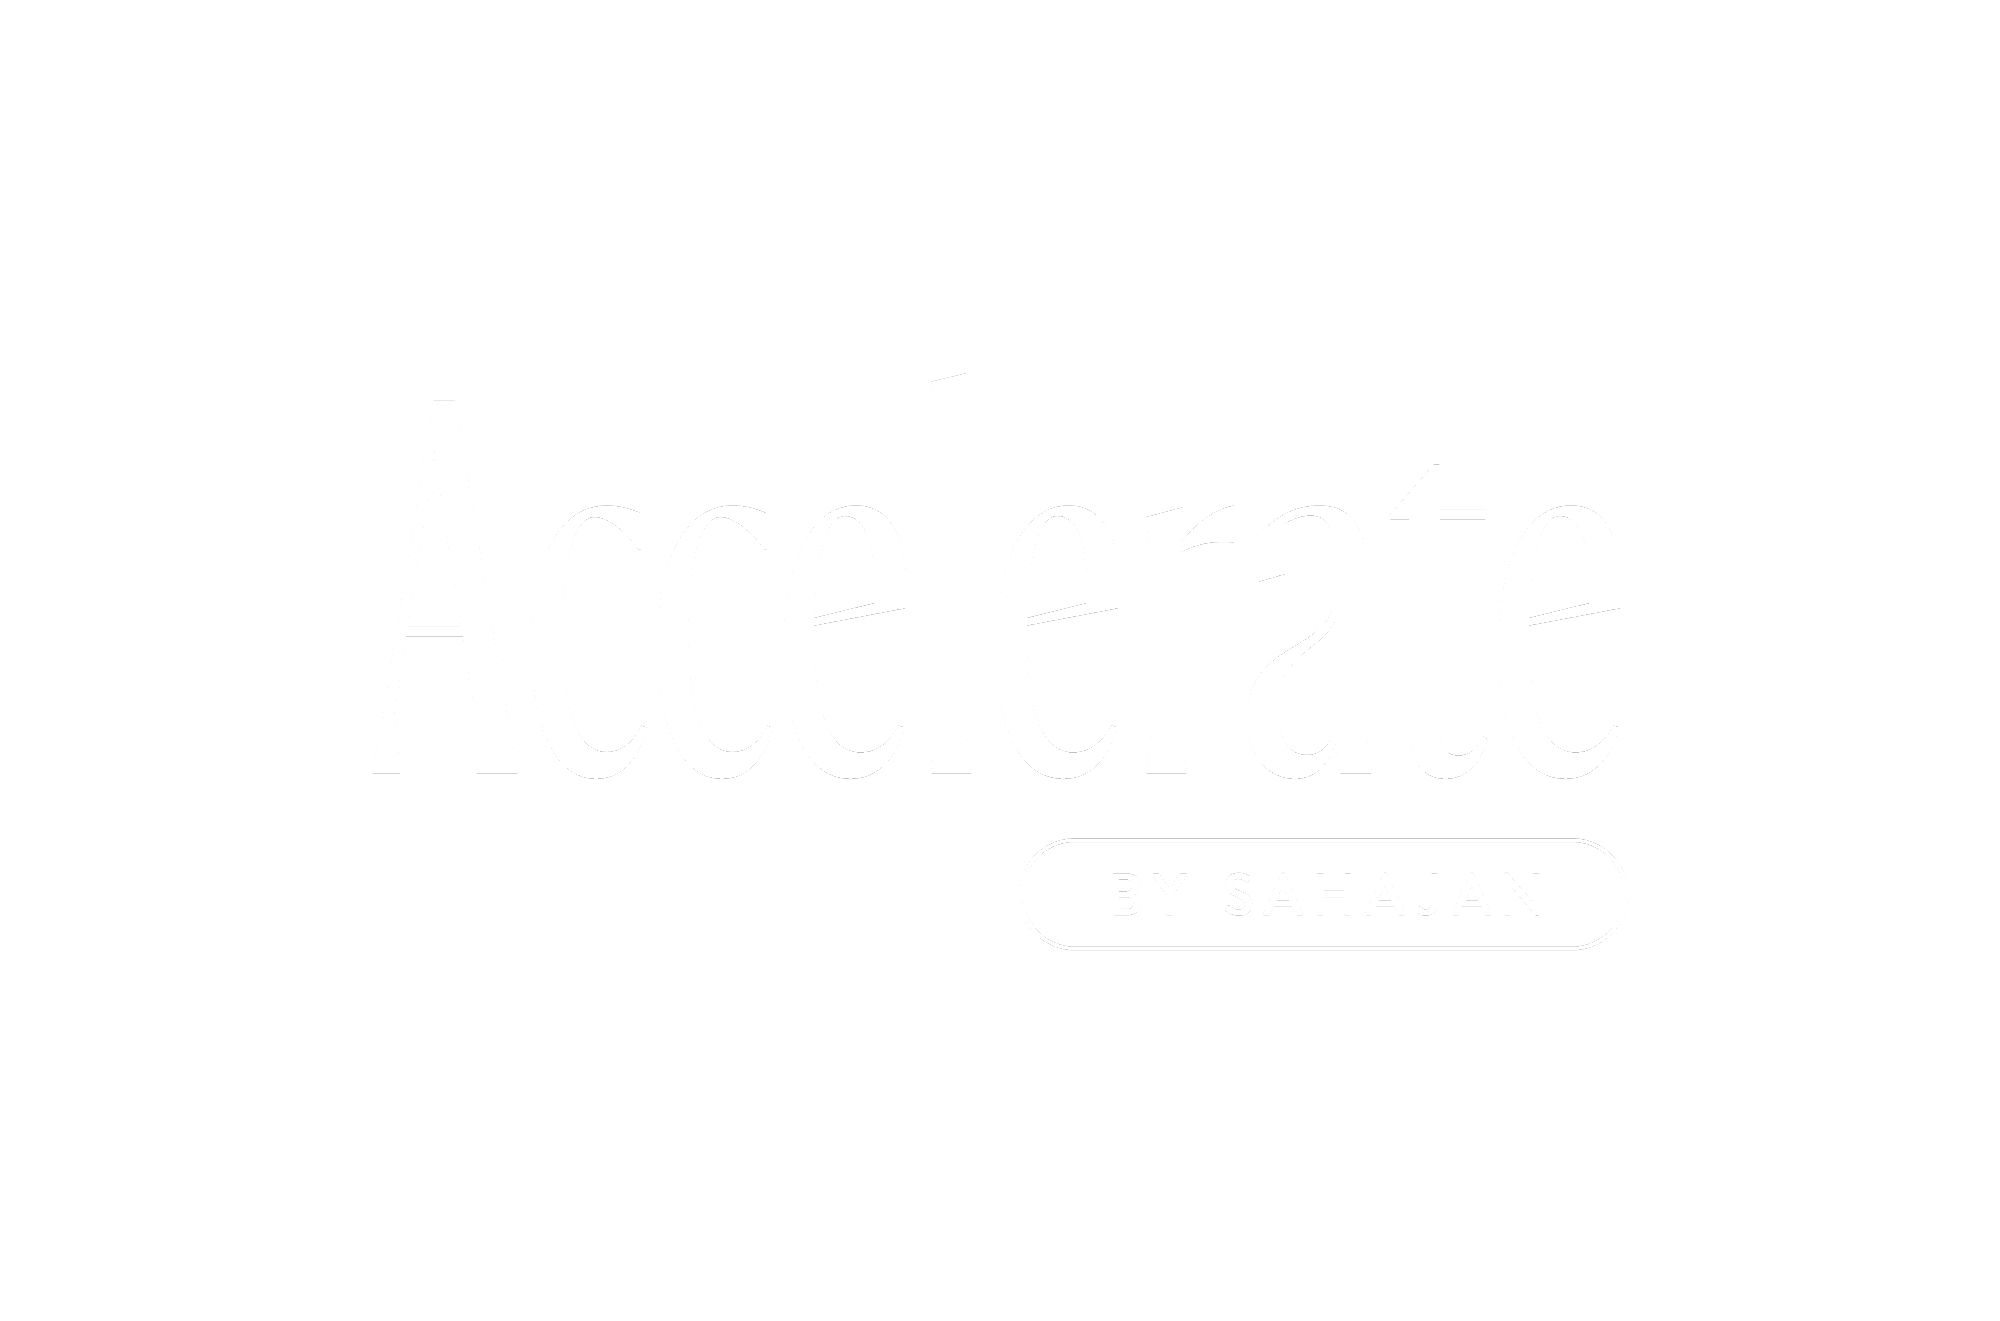 AccelerateHer